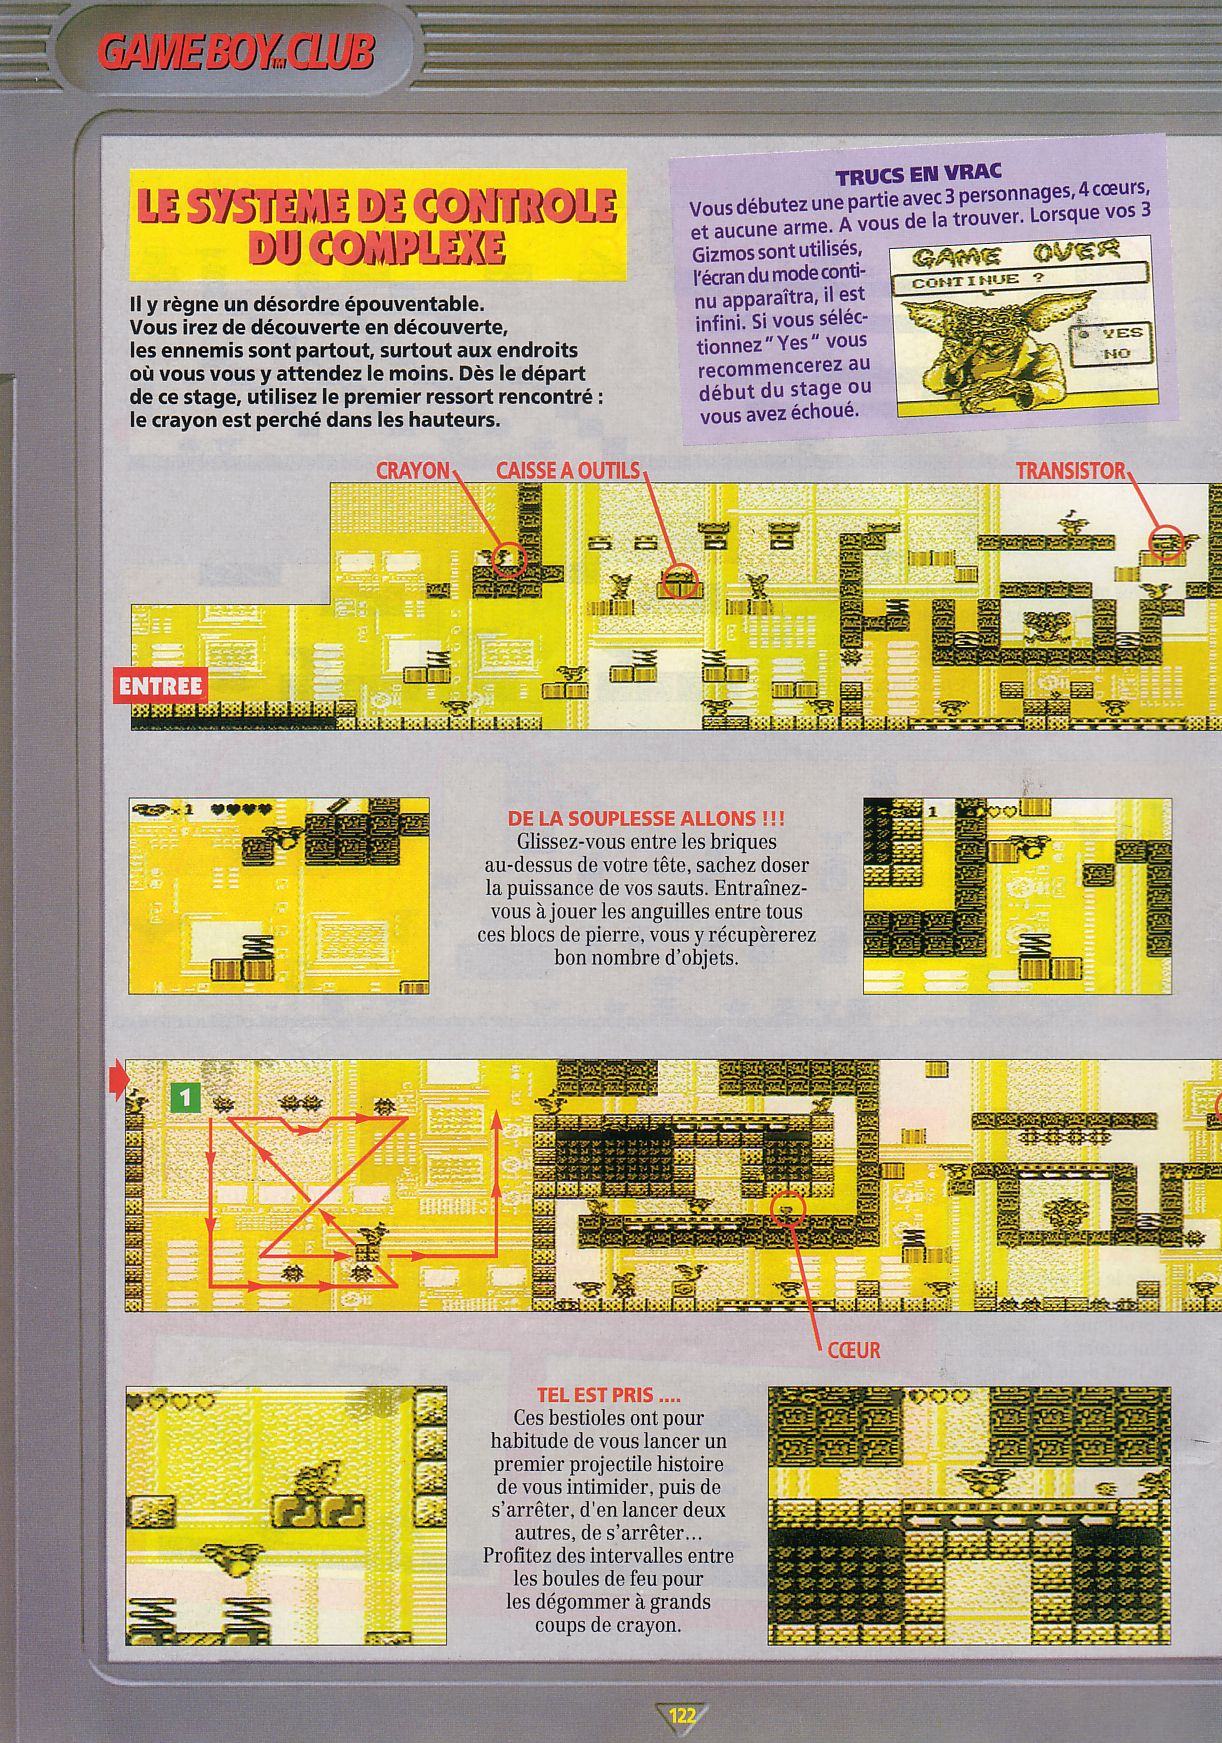 tests//813/Nintendo Player 007 - Page 122 (1992-11-12).jpg